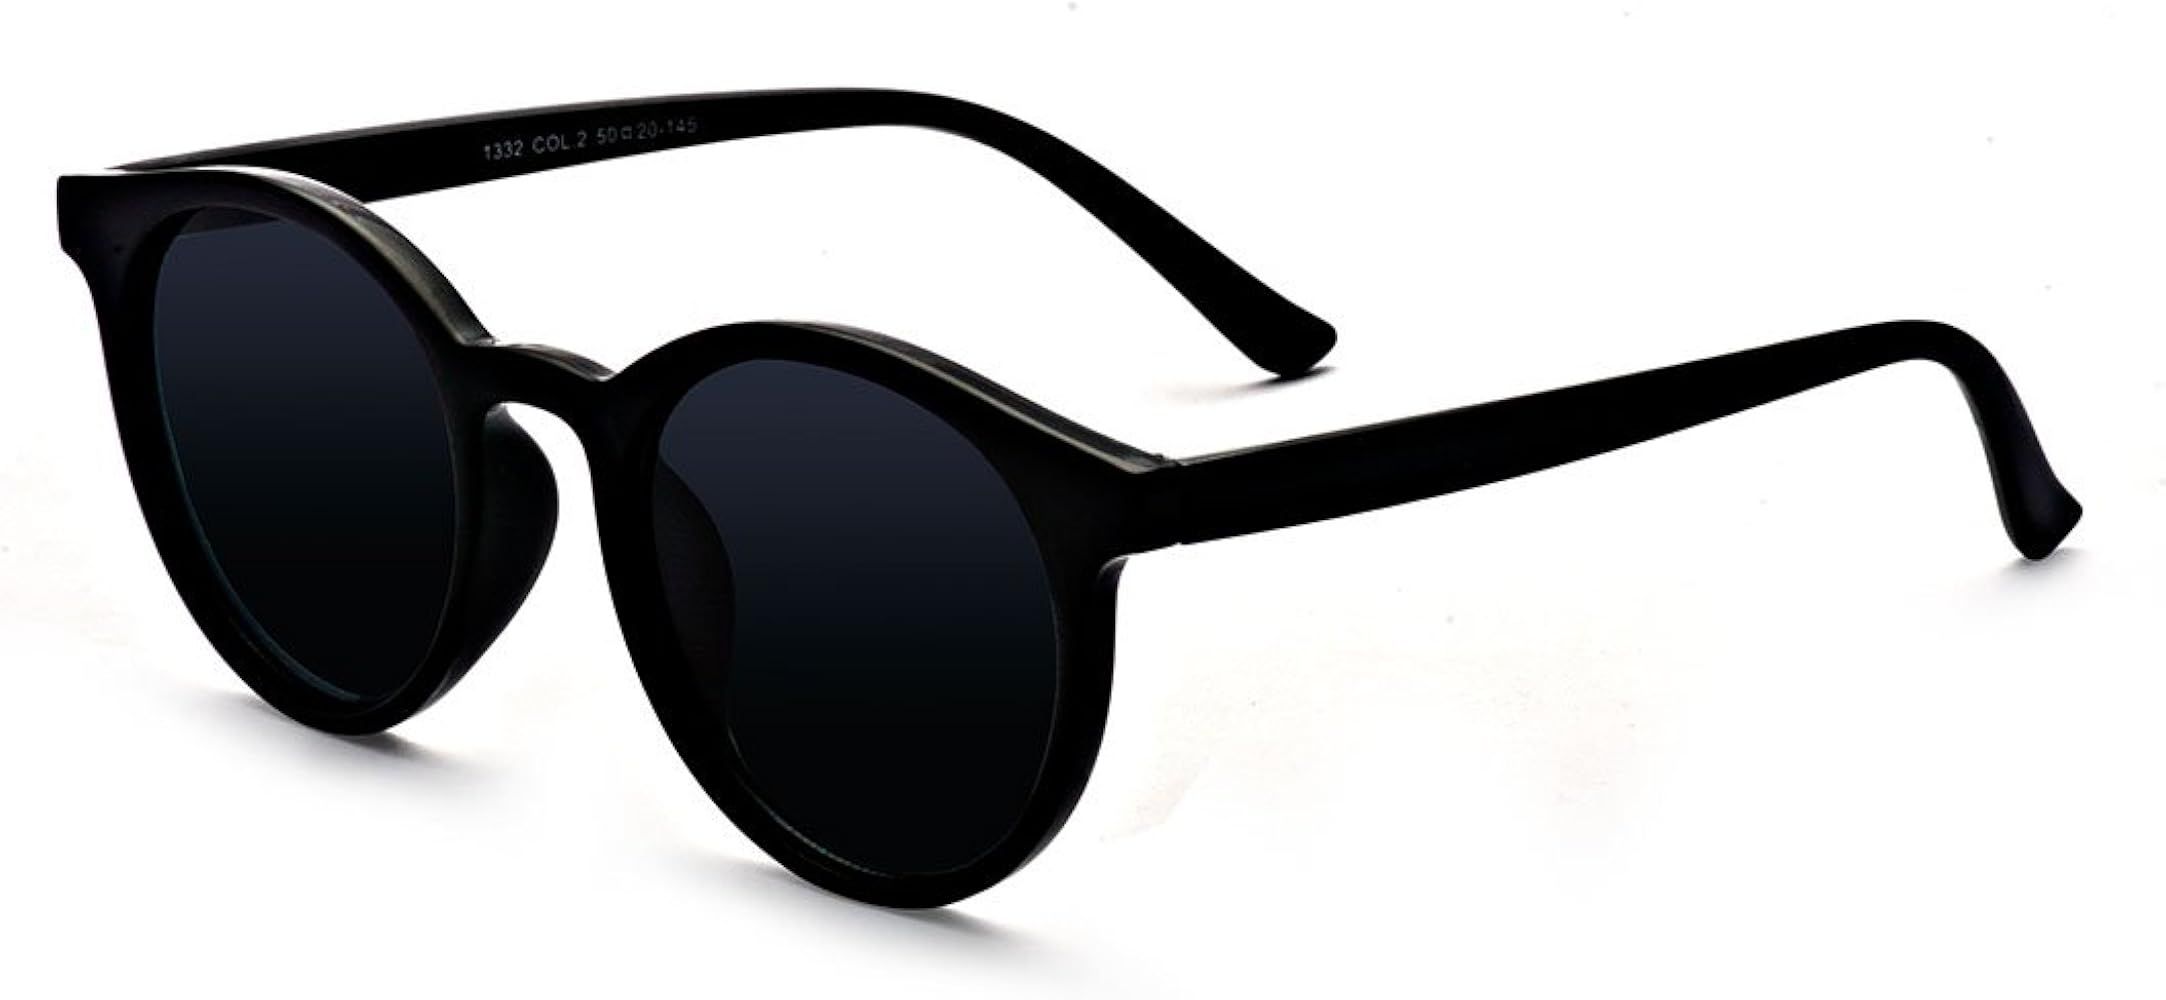 Kelens Vintage Polarized Horn Rimmed Round Circle Sunglasses UV400 Protection | Amazon (US)